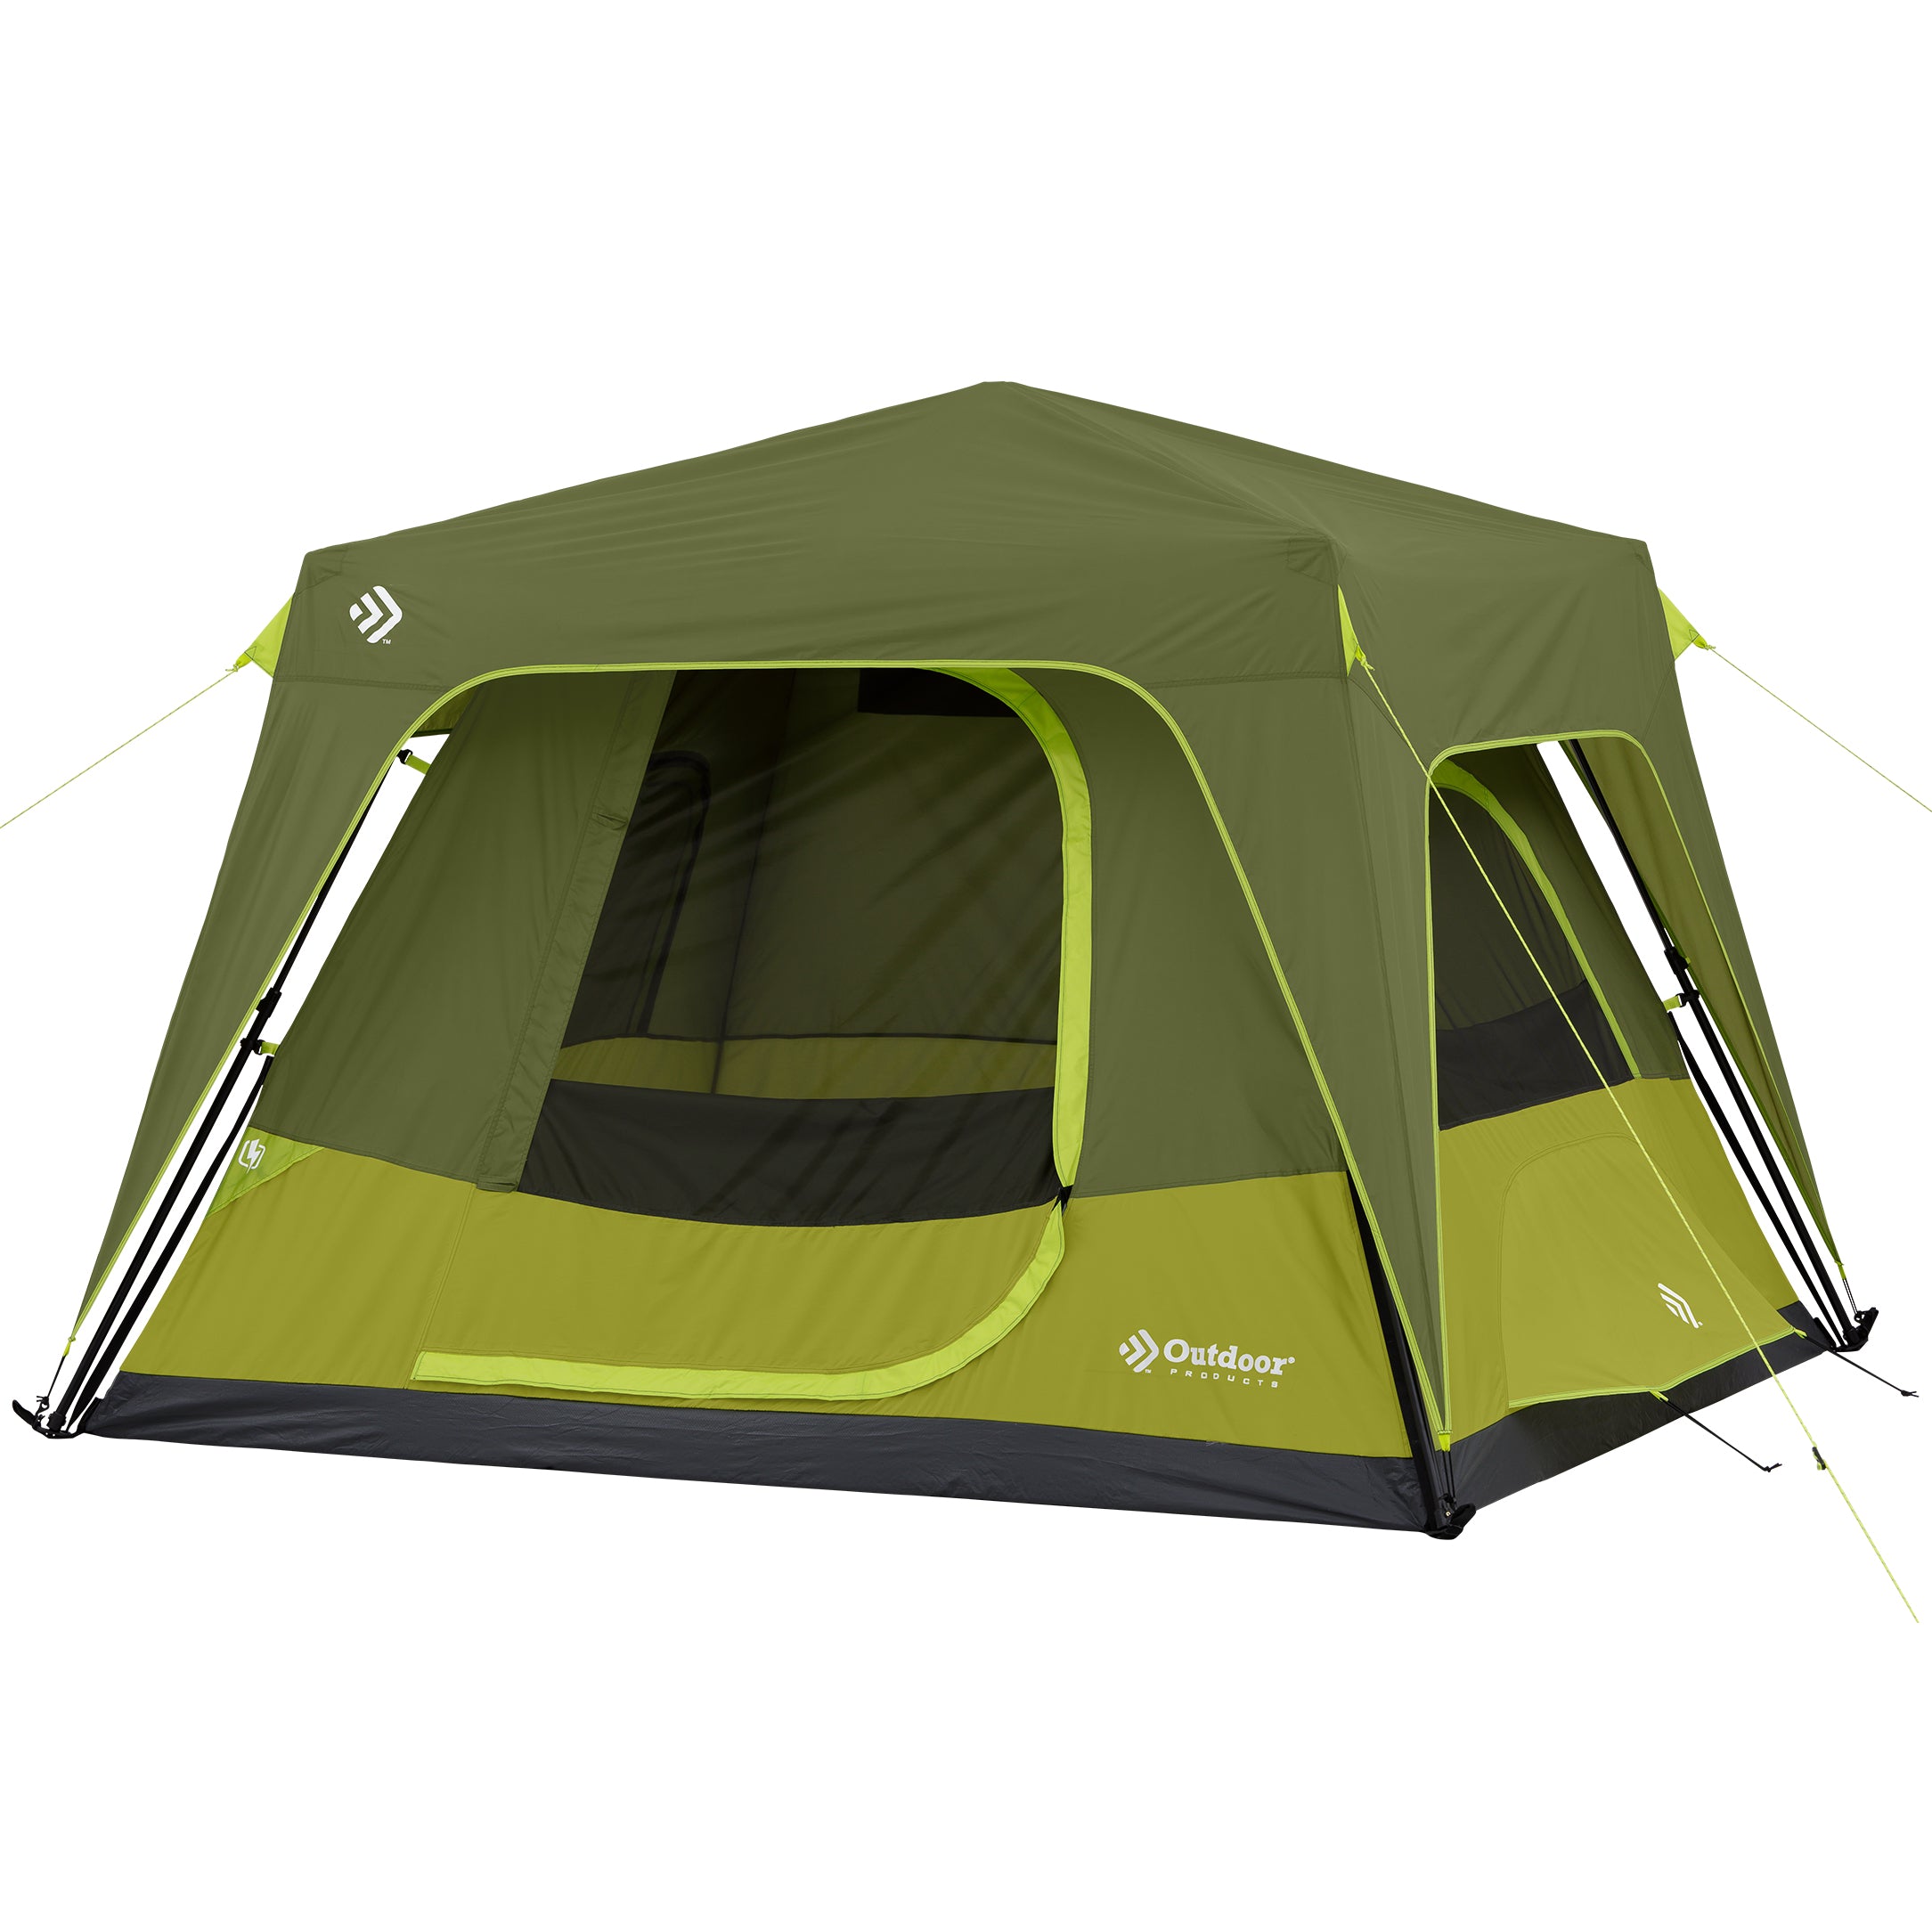 Sluit een verzekering af familie Omgeving 4 Person Instant Cabin Tent | Outdoor Products – Outdoor Products - Camping